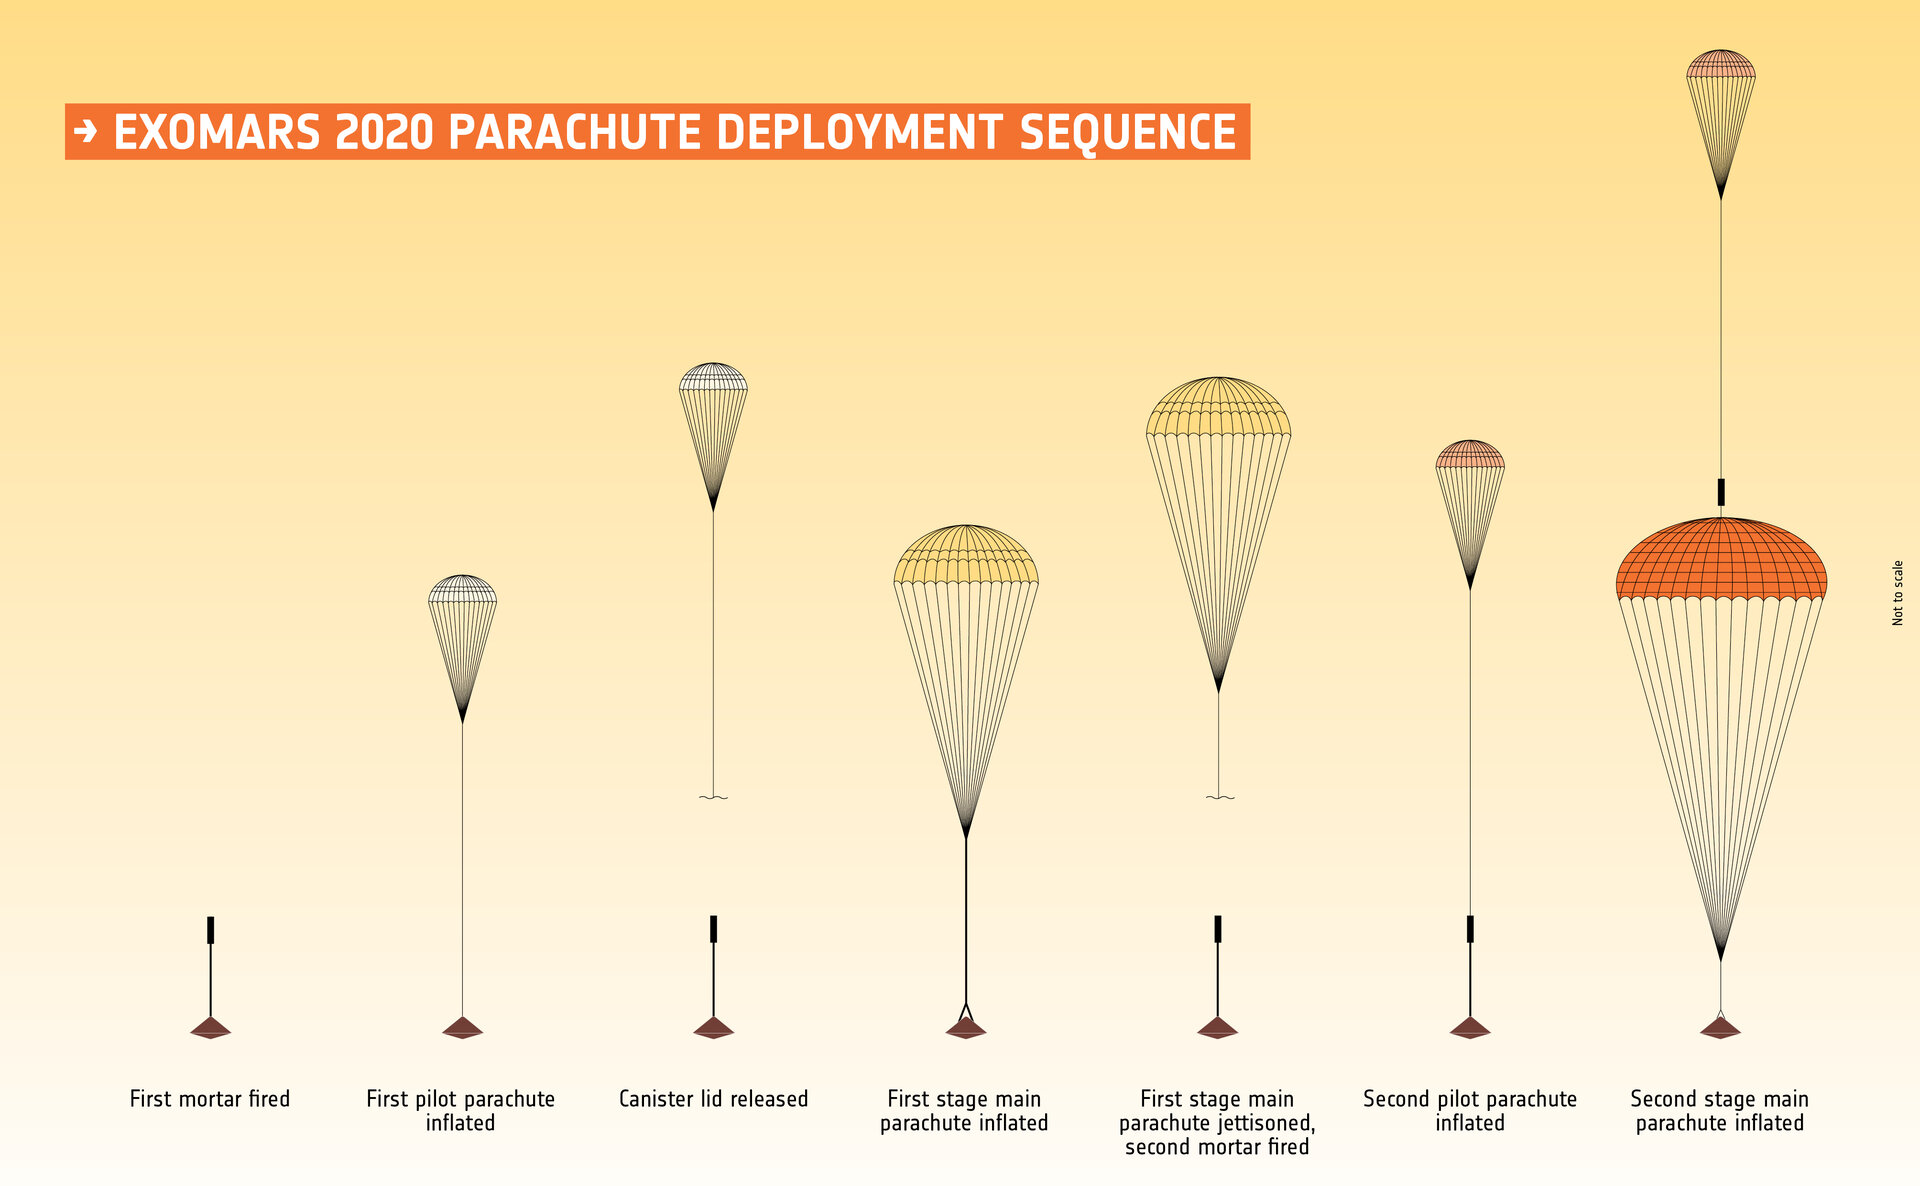 http://www.esa.int/var/esa/storage/images/esa_multimedia/images/2018/03/exomars_2020_parachute_deployment_sequence/17431643-1-eng-GB/ExoMars_2020_parachute_deployment_sequence_pillars.jpg